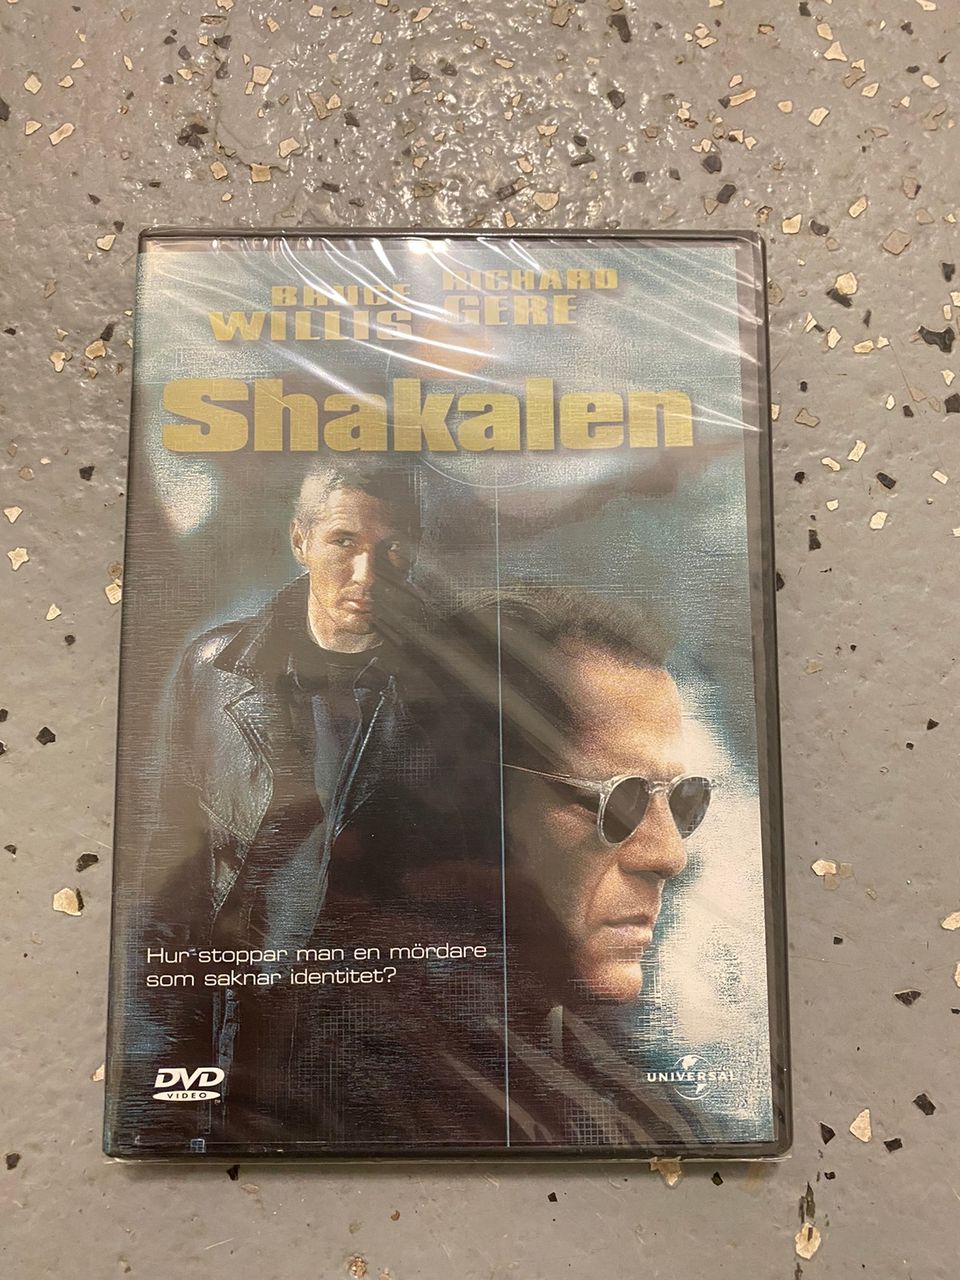 Shakaali dvd